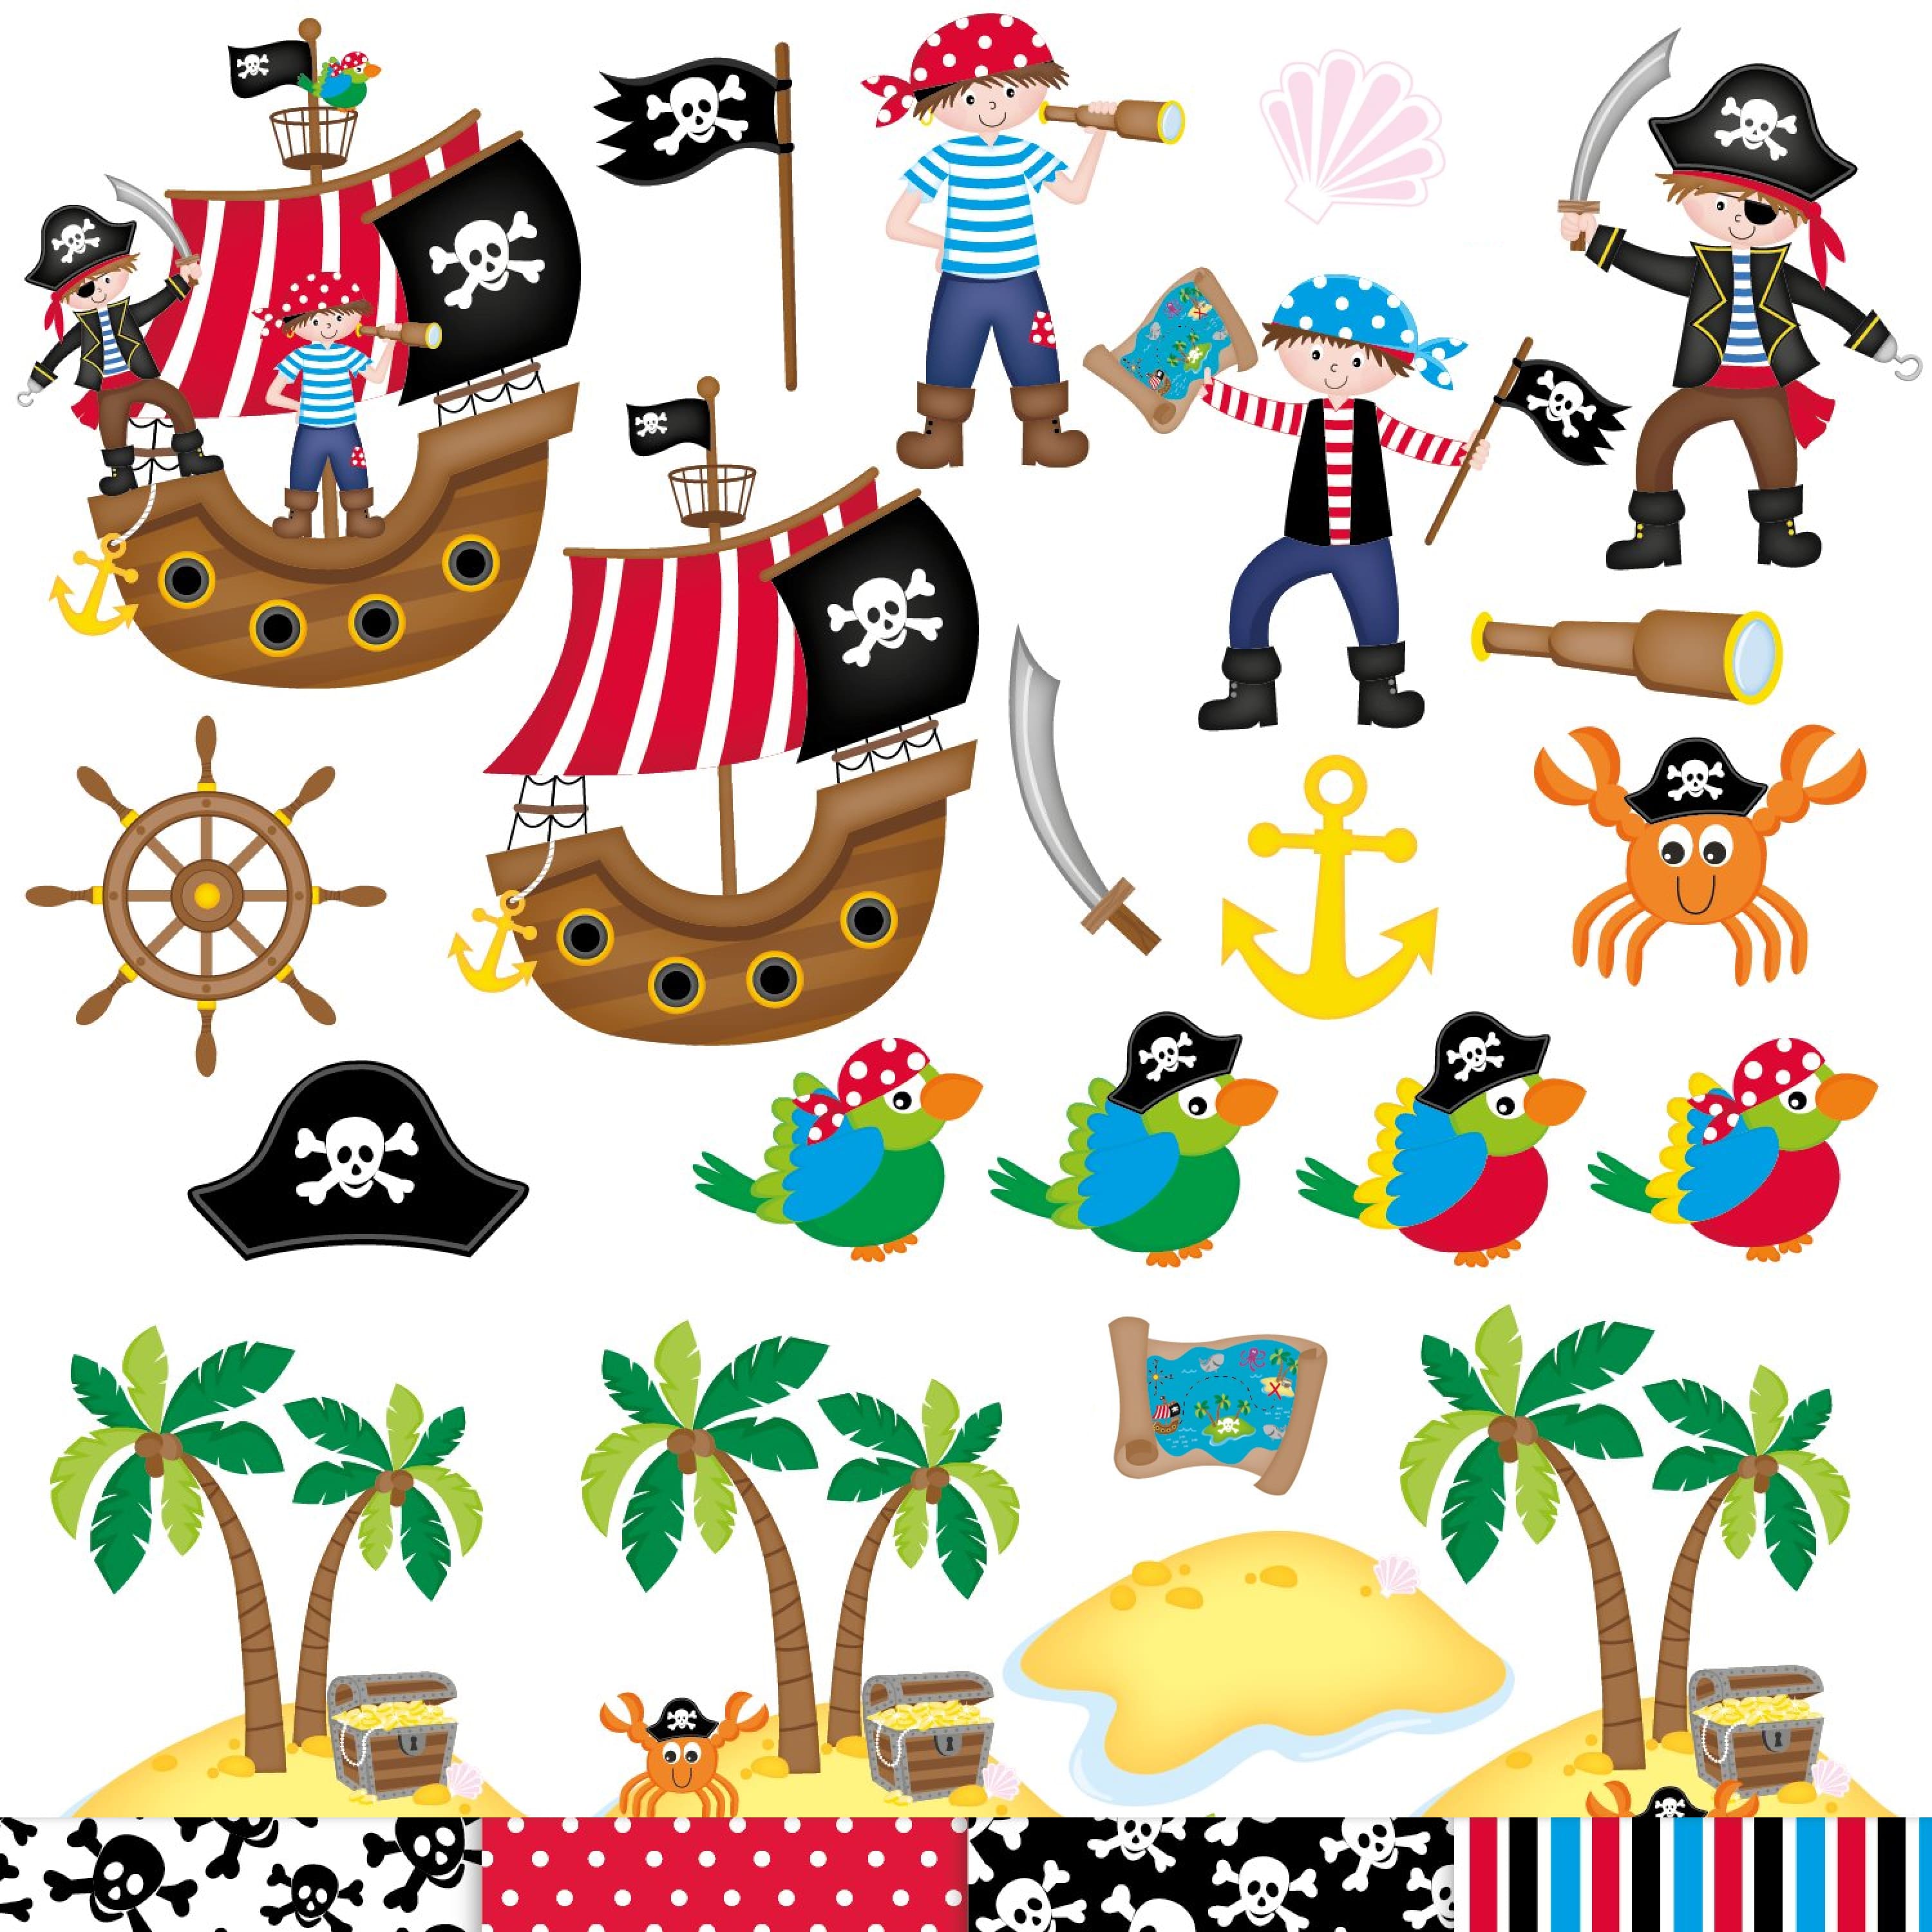 Pirate boy clipart – MUJKA CLIPARTS